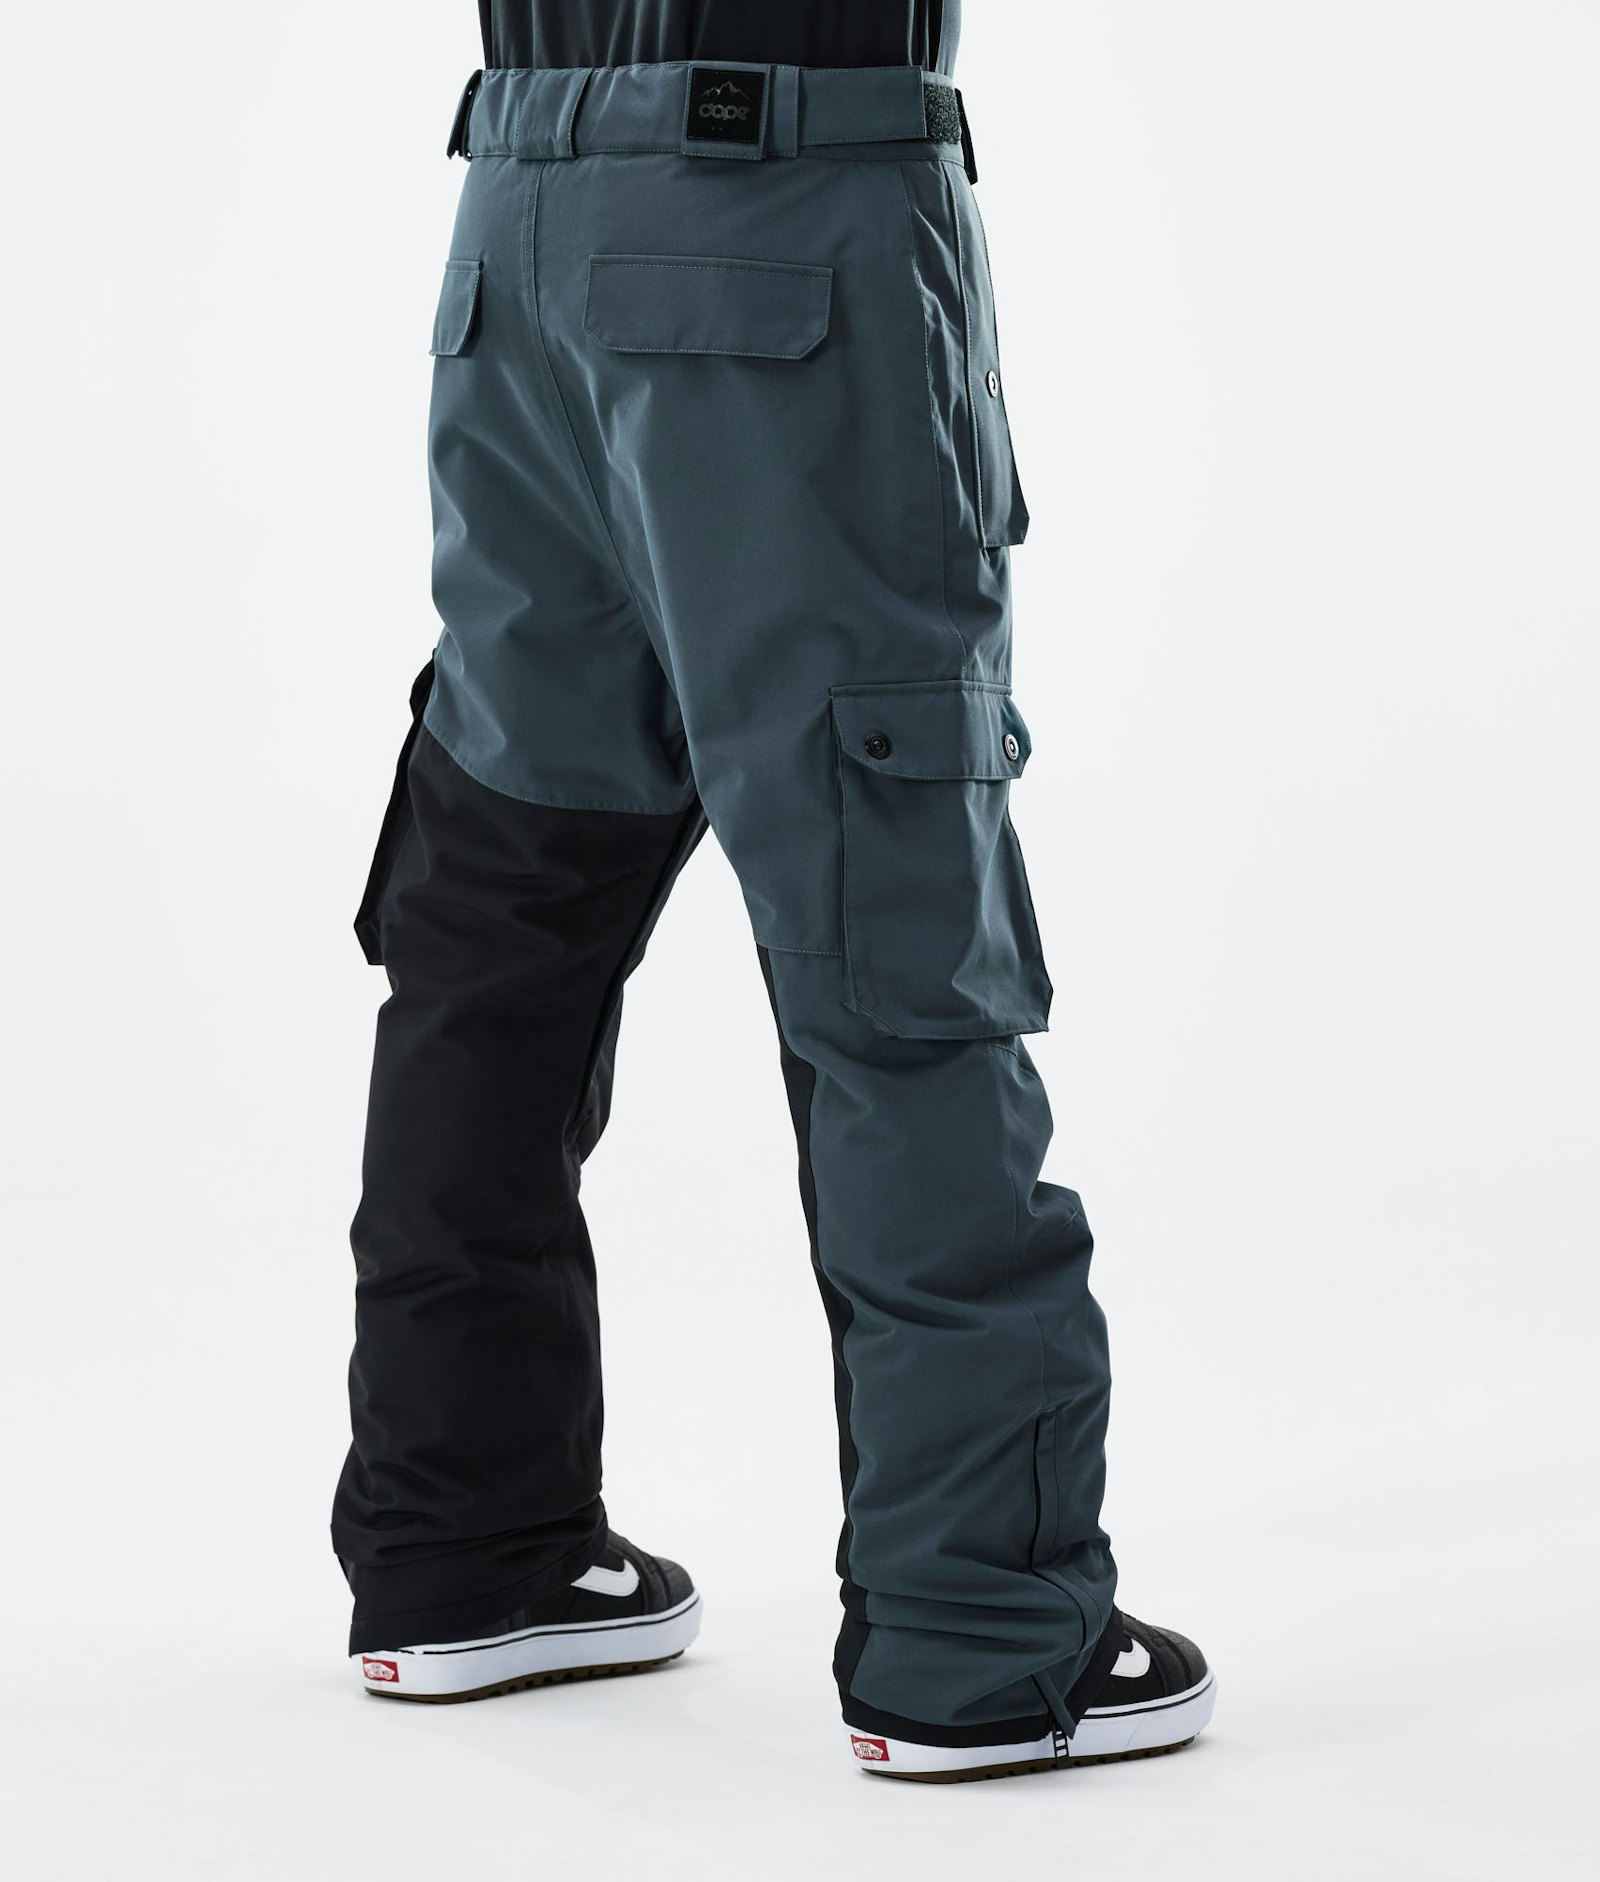 Dope Adept 2021 Pantalon de Snowboard Homme Metal Blue/Black